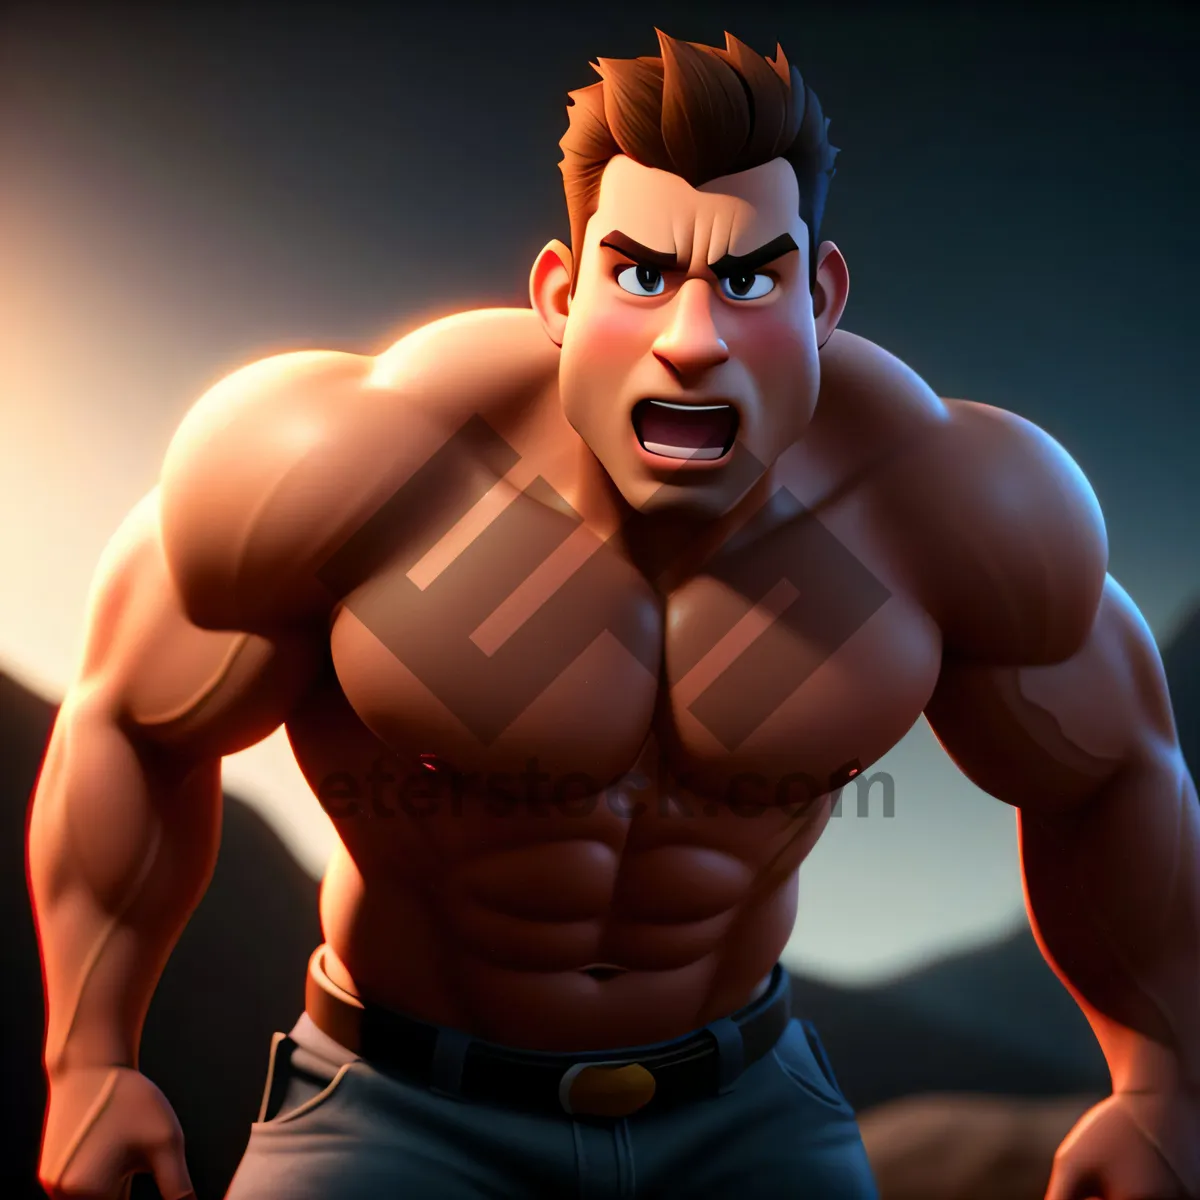 Picture of Muscular Cartoon Man Figure - Bodybuilding Animation